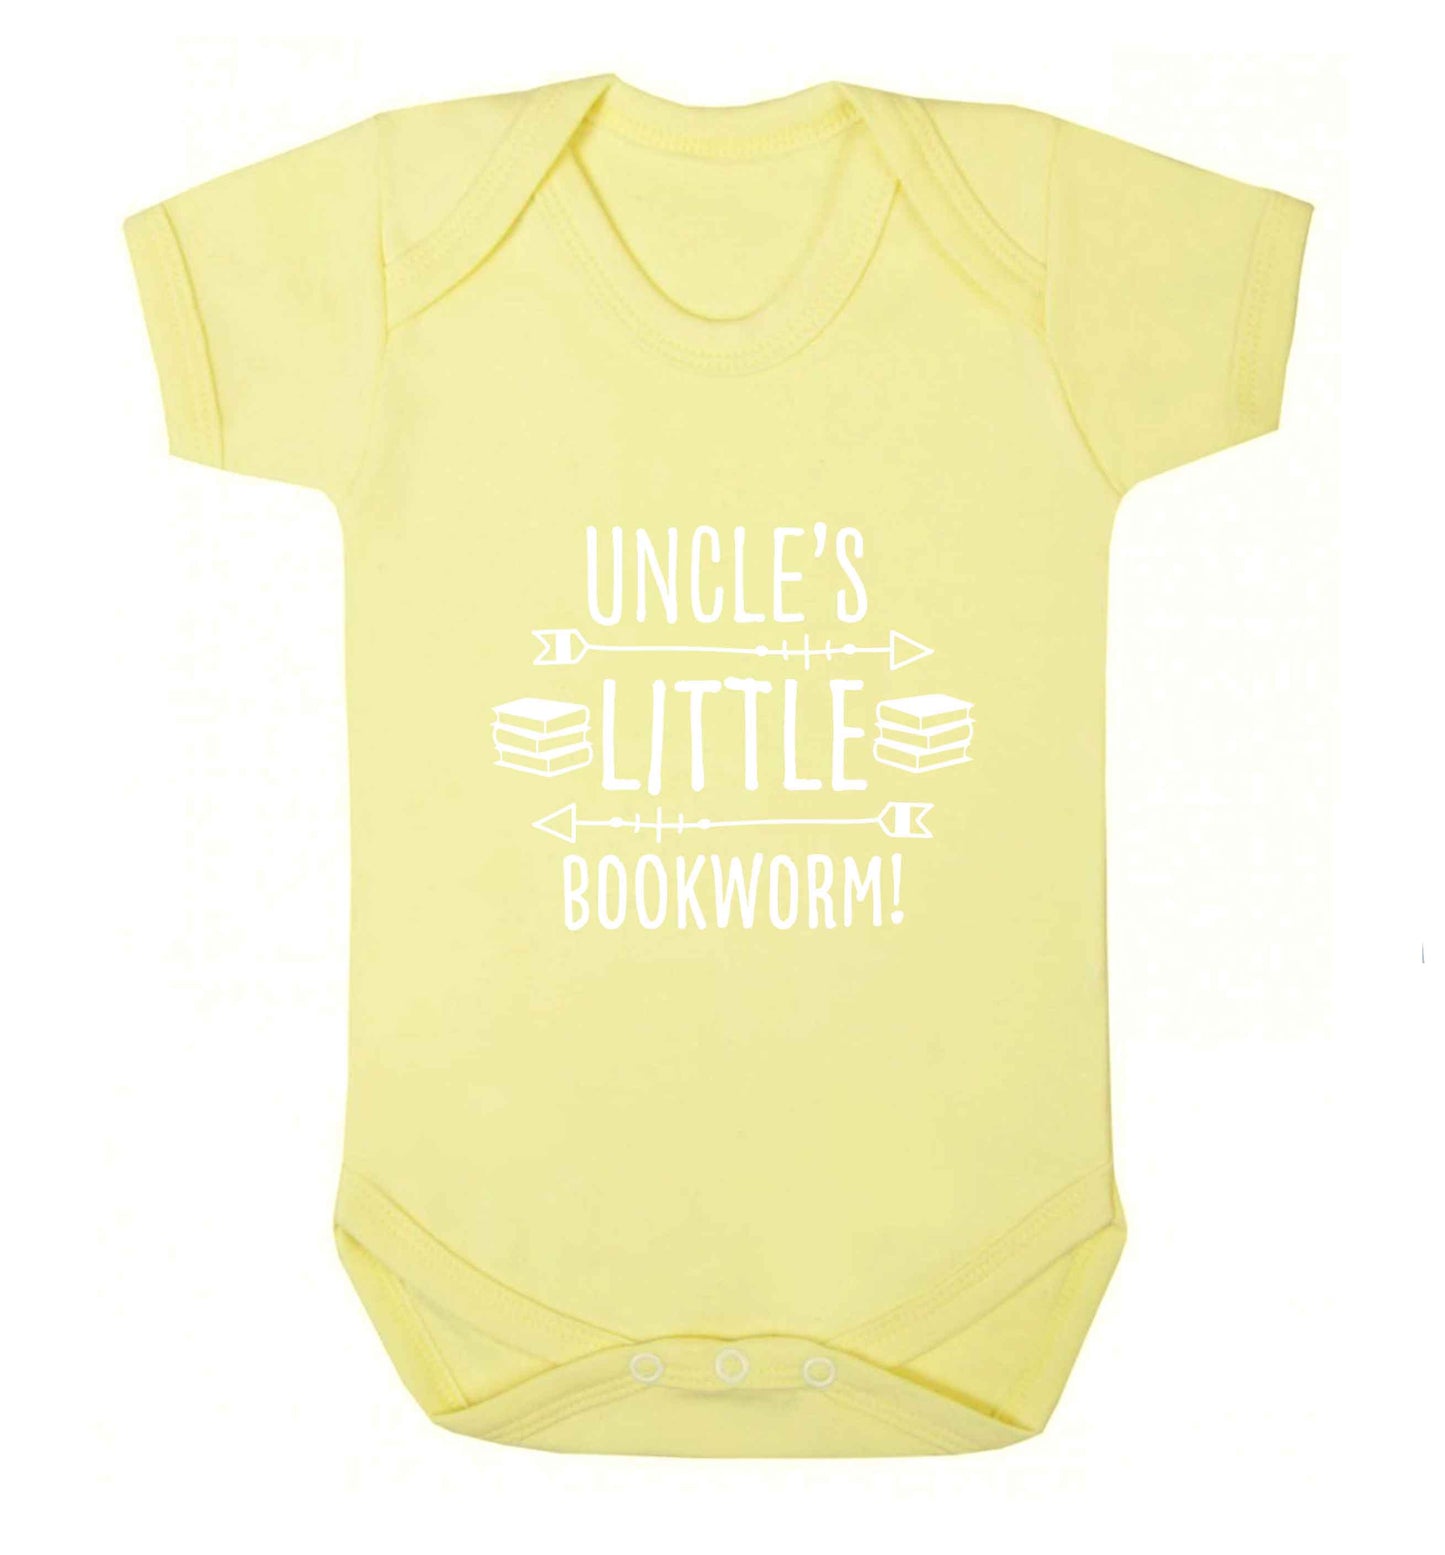 Uncle's little bookworm baby vest pale yellow 18-24 months